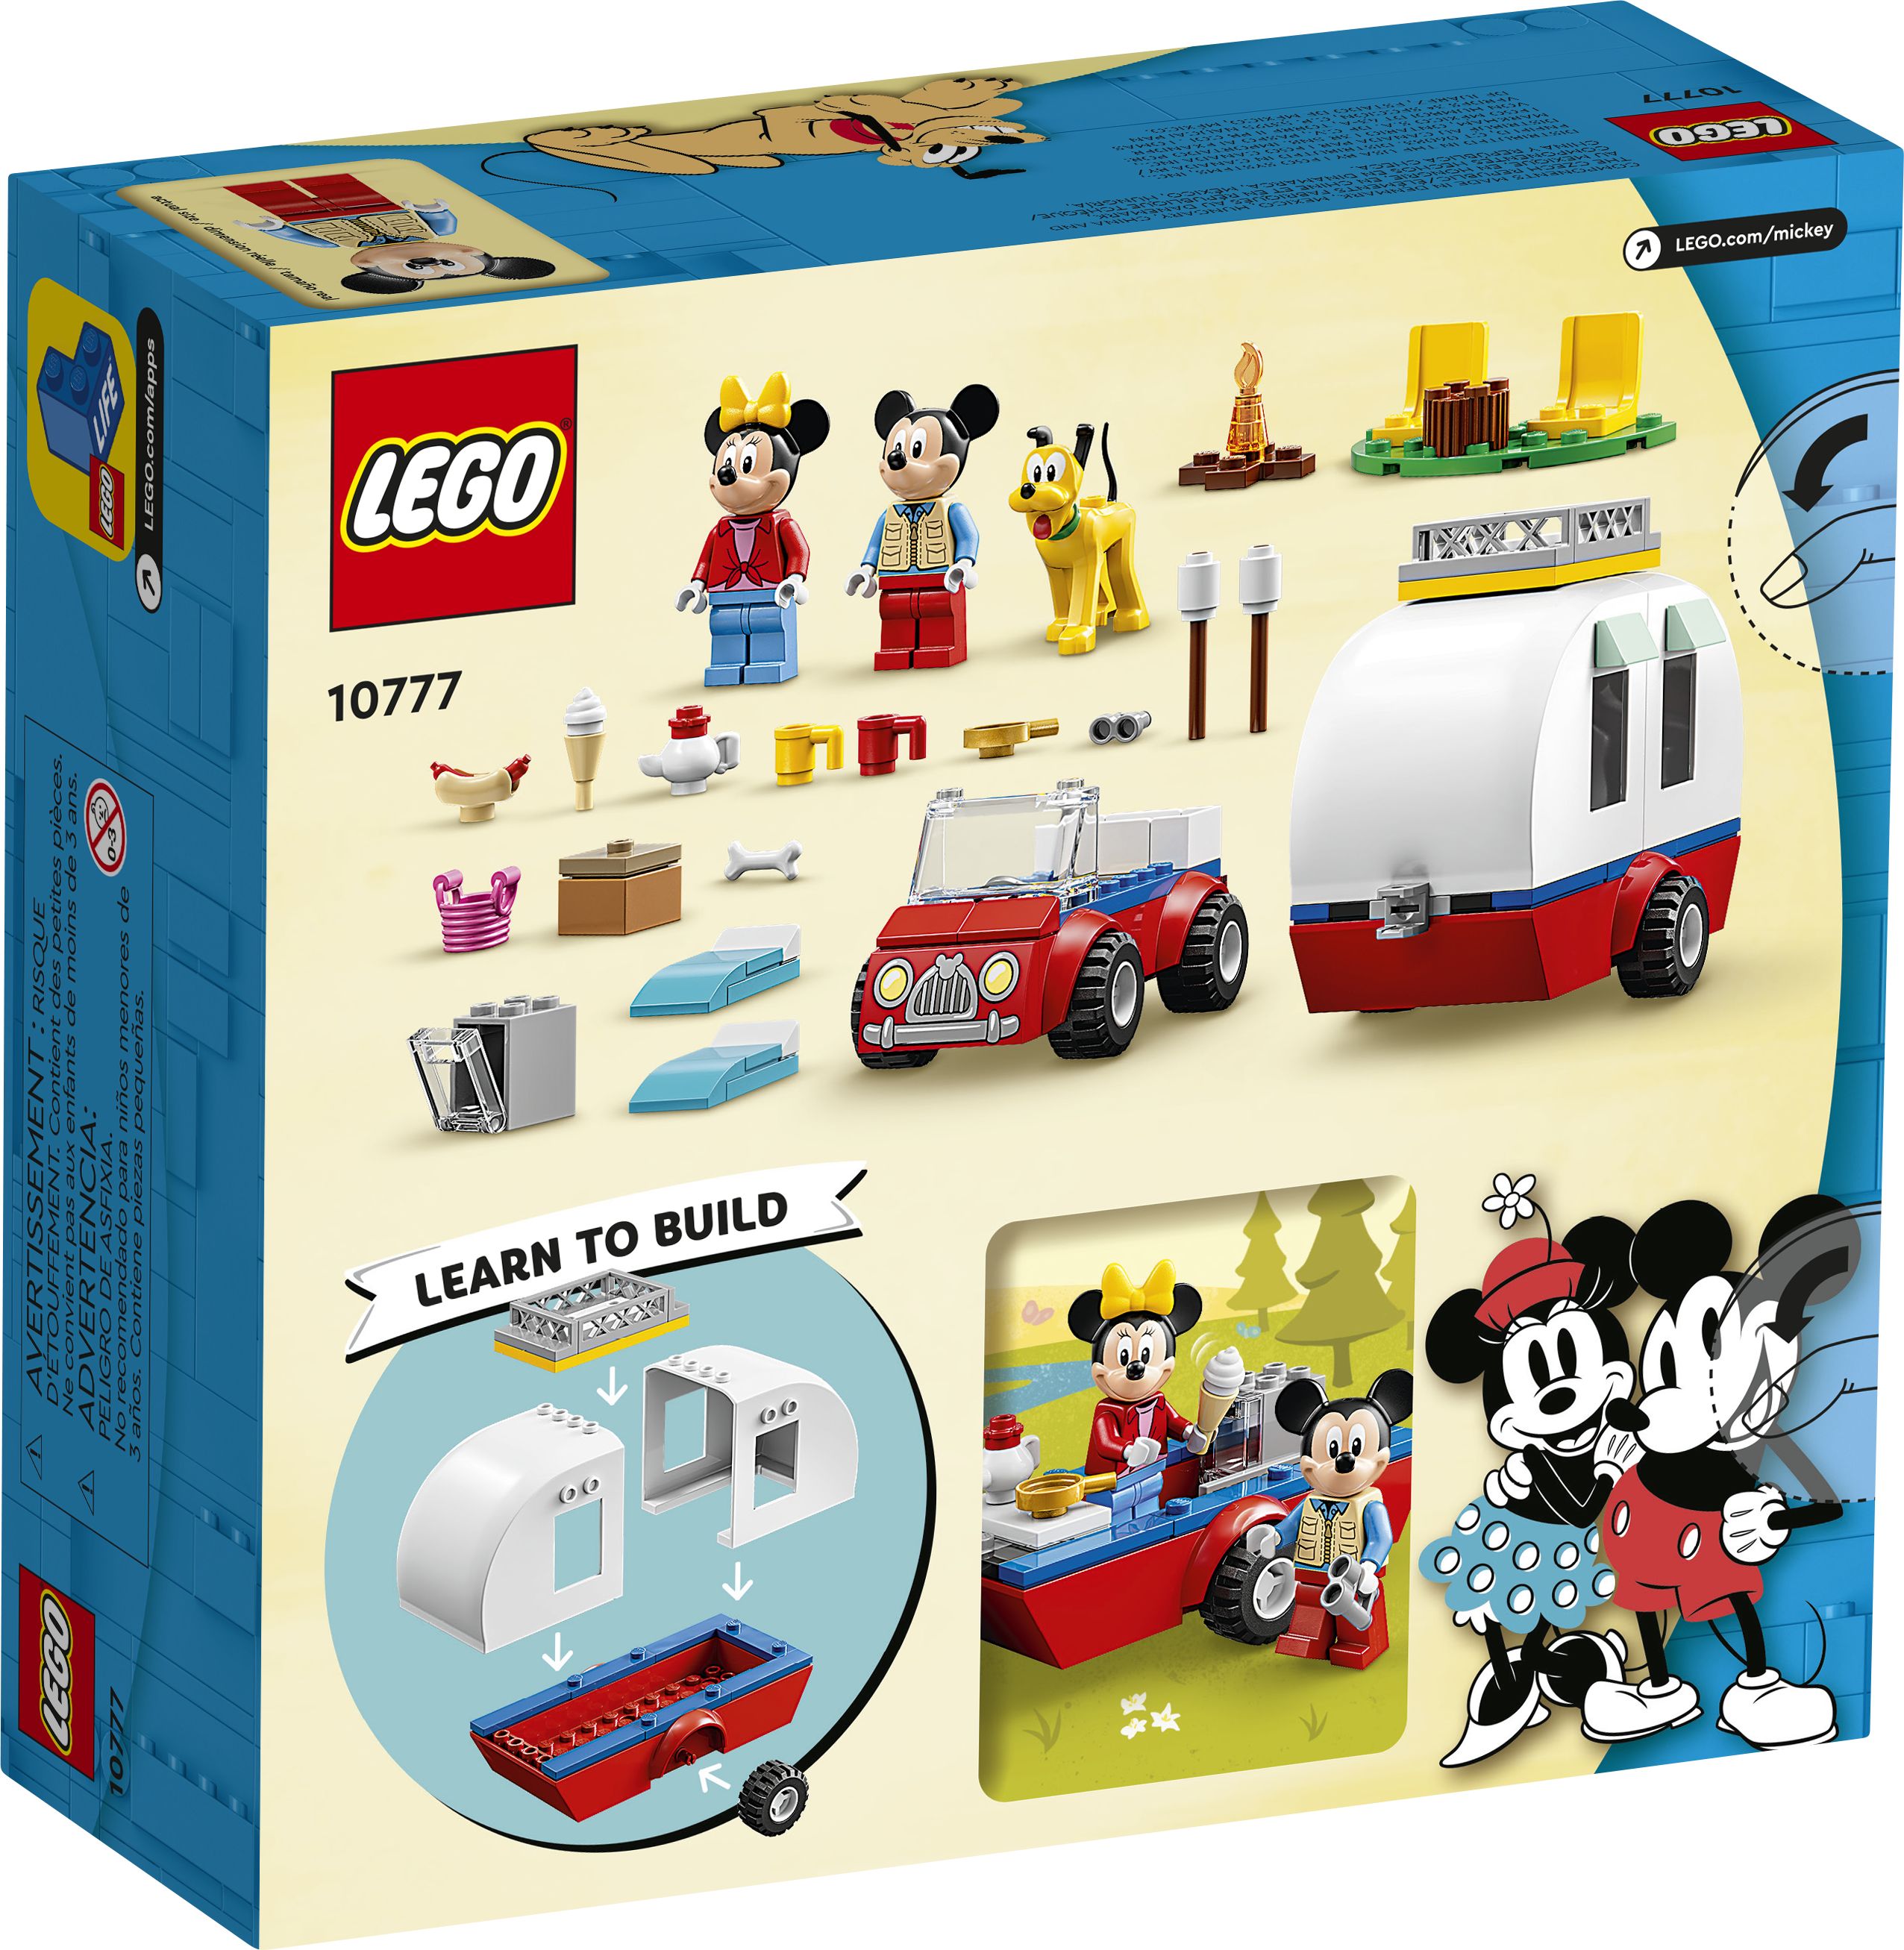 LEGO Disney 10777 Mickys und Minnies Campingausflug LEGO_10777_Box5_v39.jpg